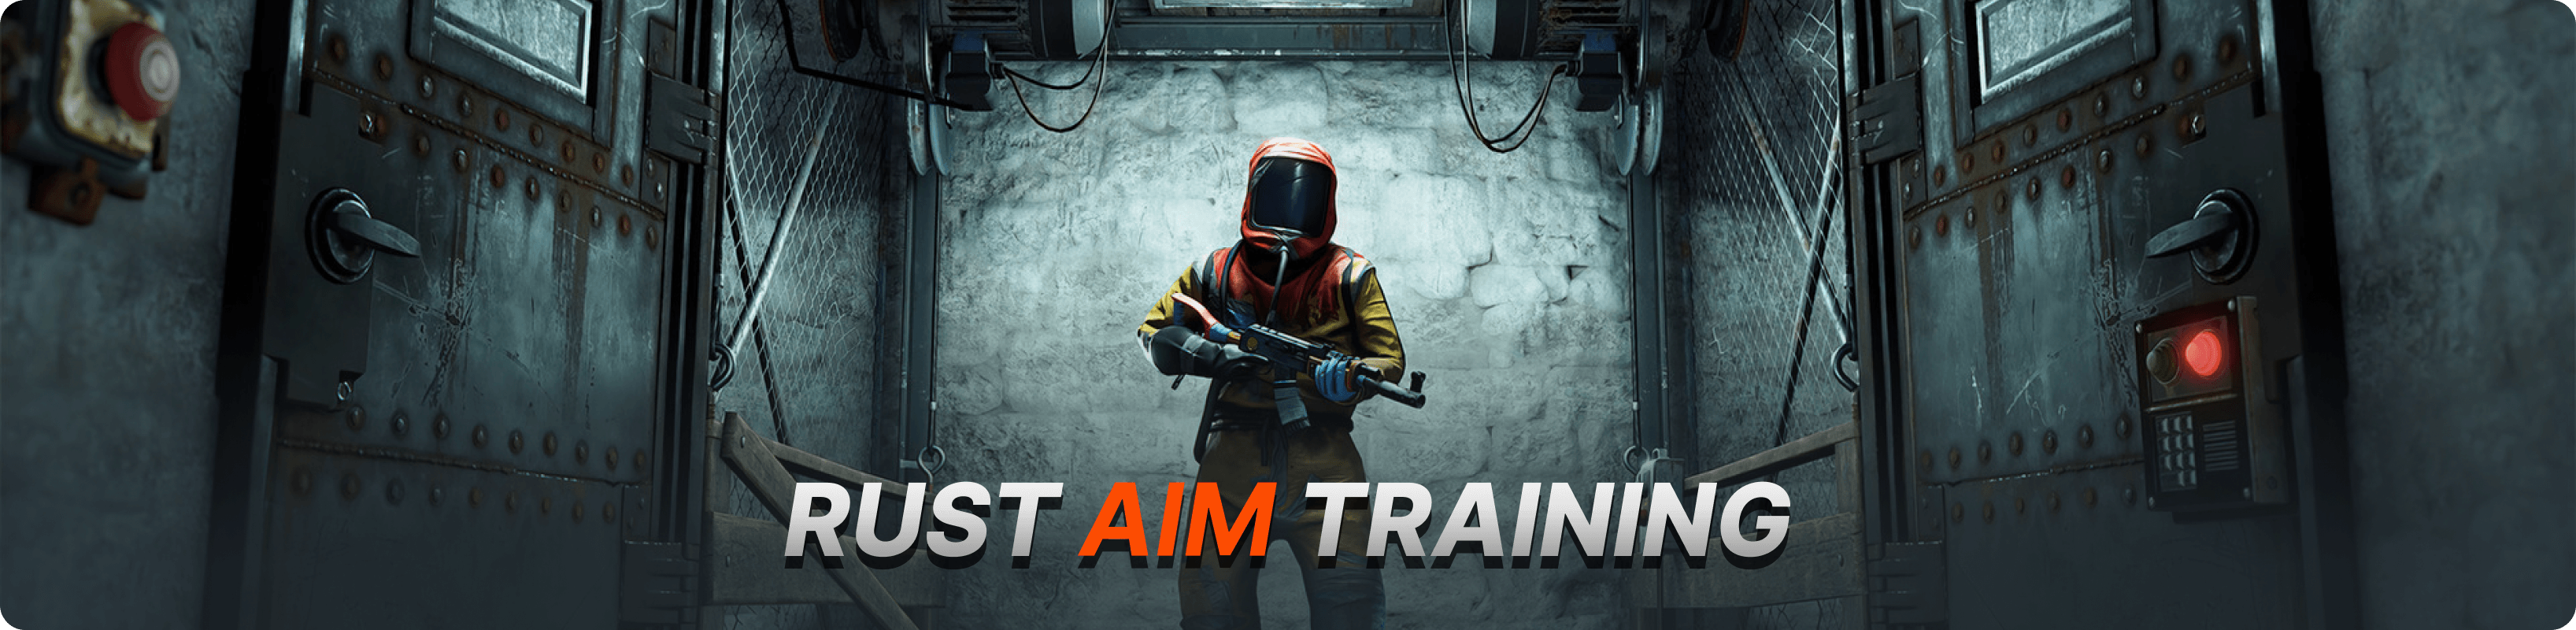 Overwatch GET BETTER AIM Guide! Insane Aim Training Mode! 